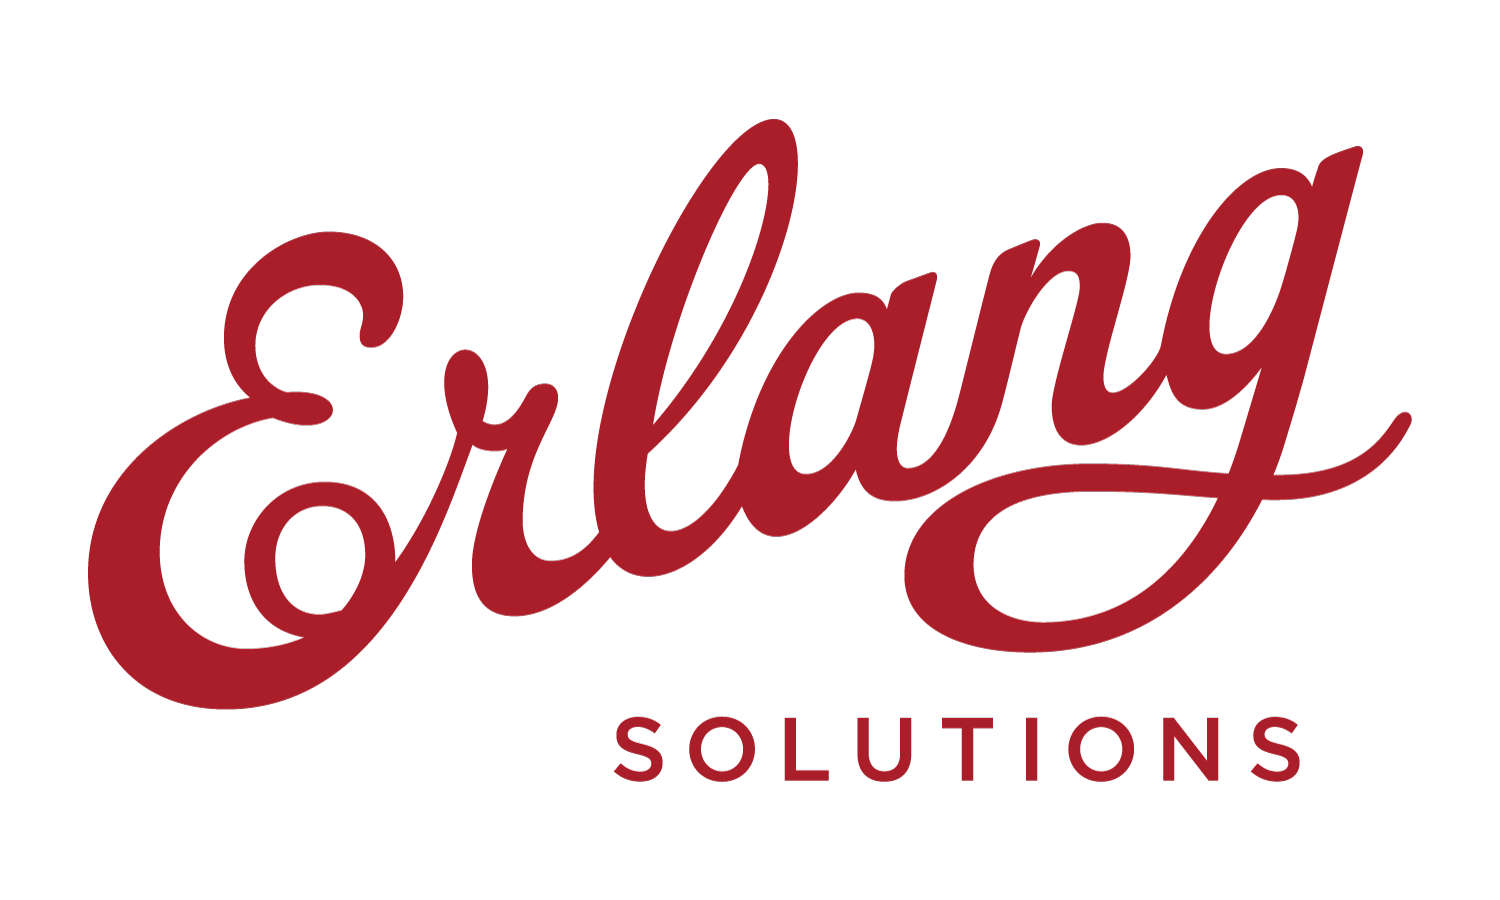 erlang solutions logo